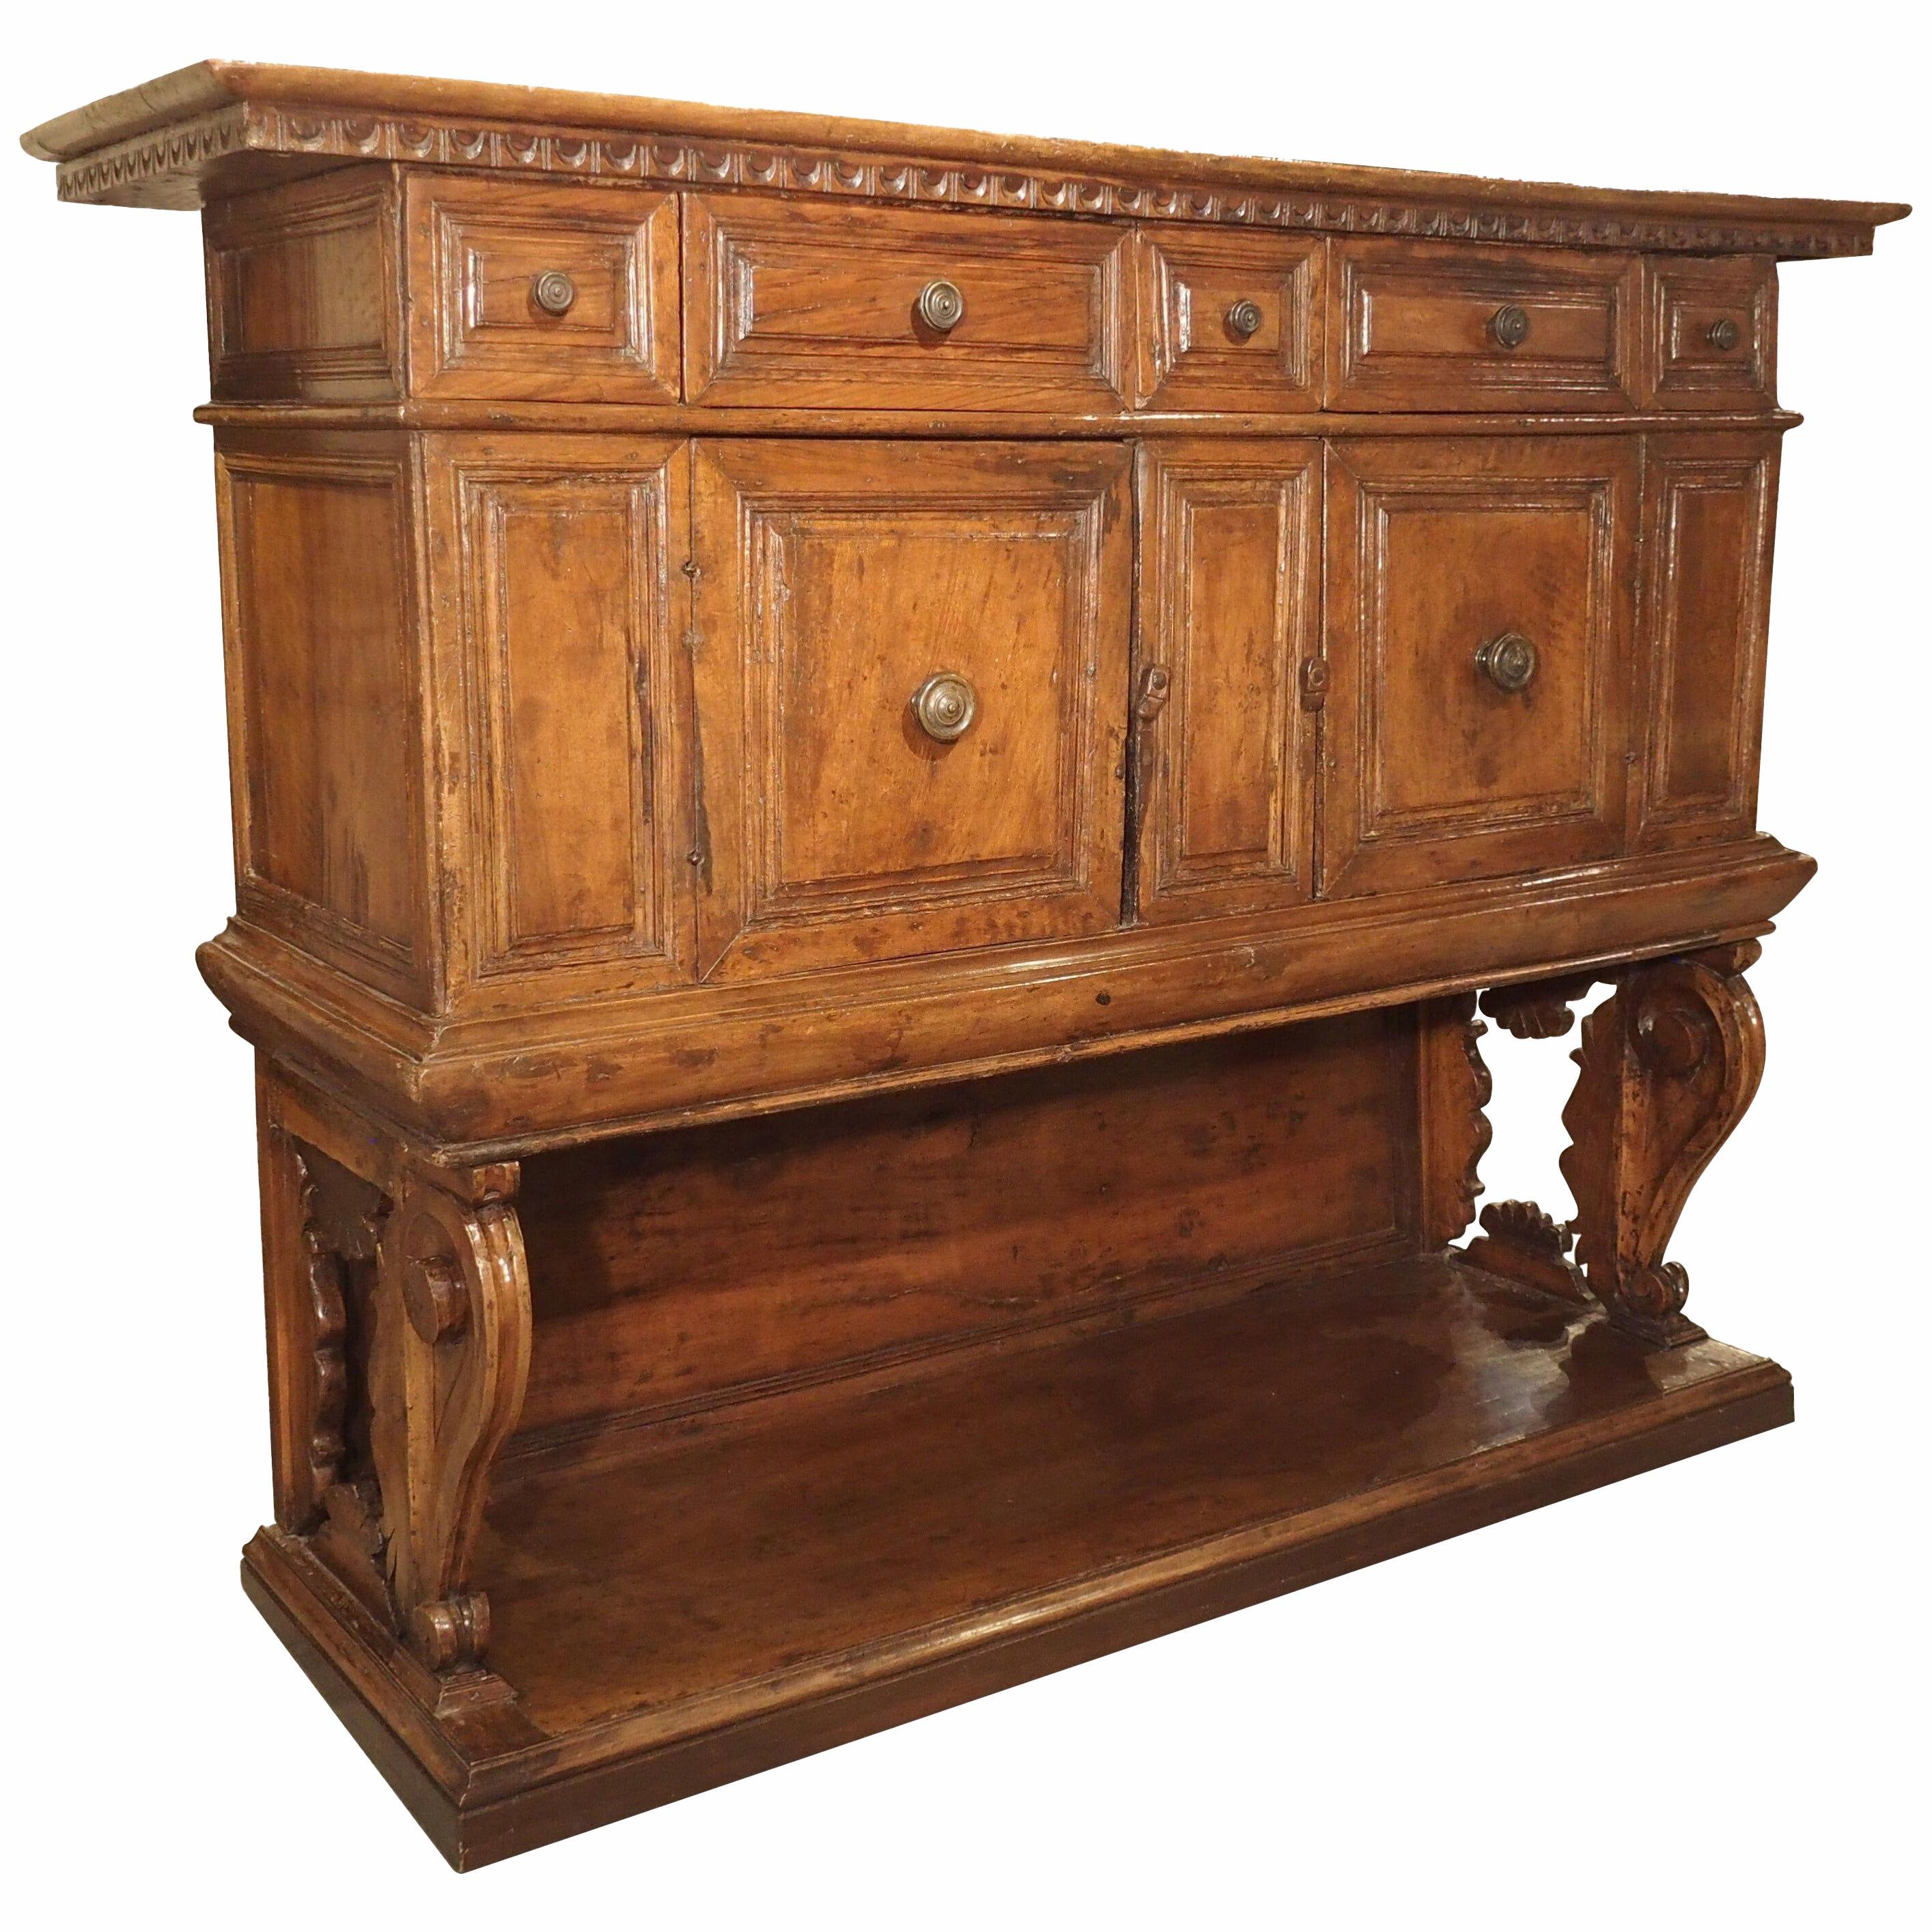 17th Century Italian Walnut Wood “Madia” Cabinet with Carved Bracket Base